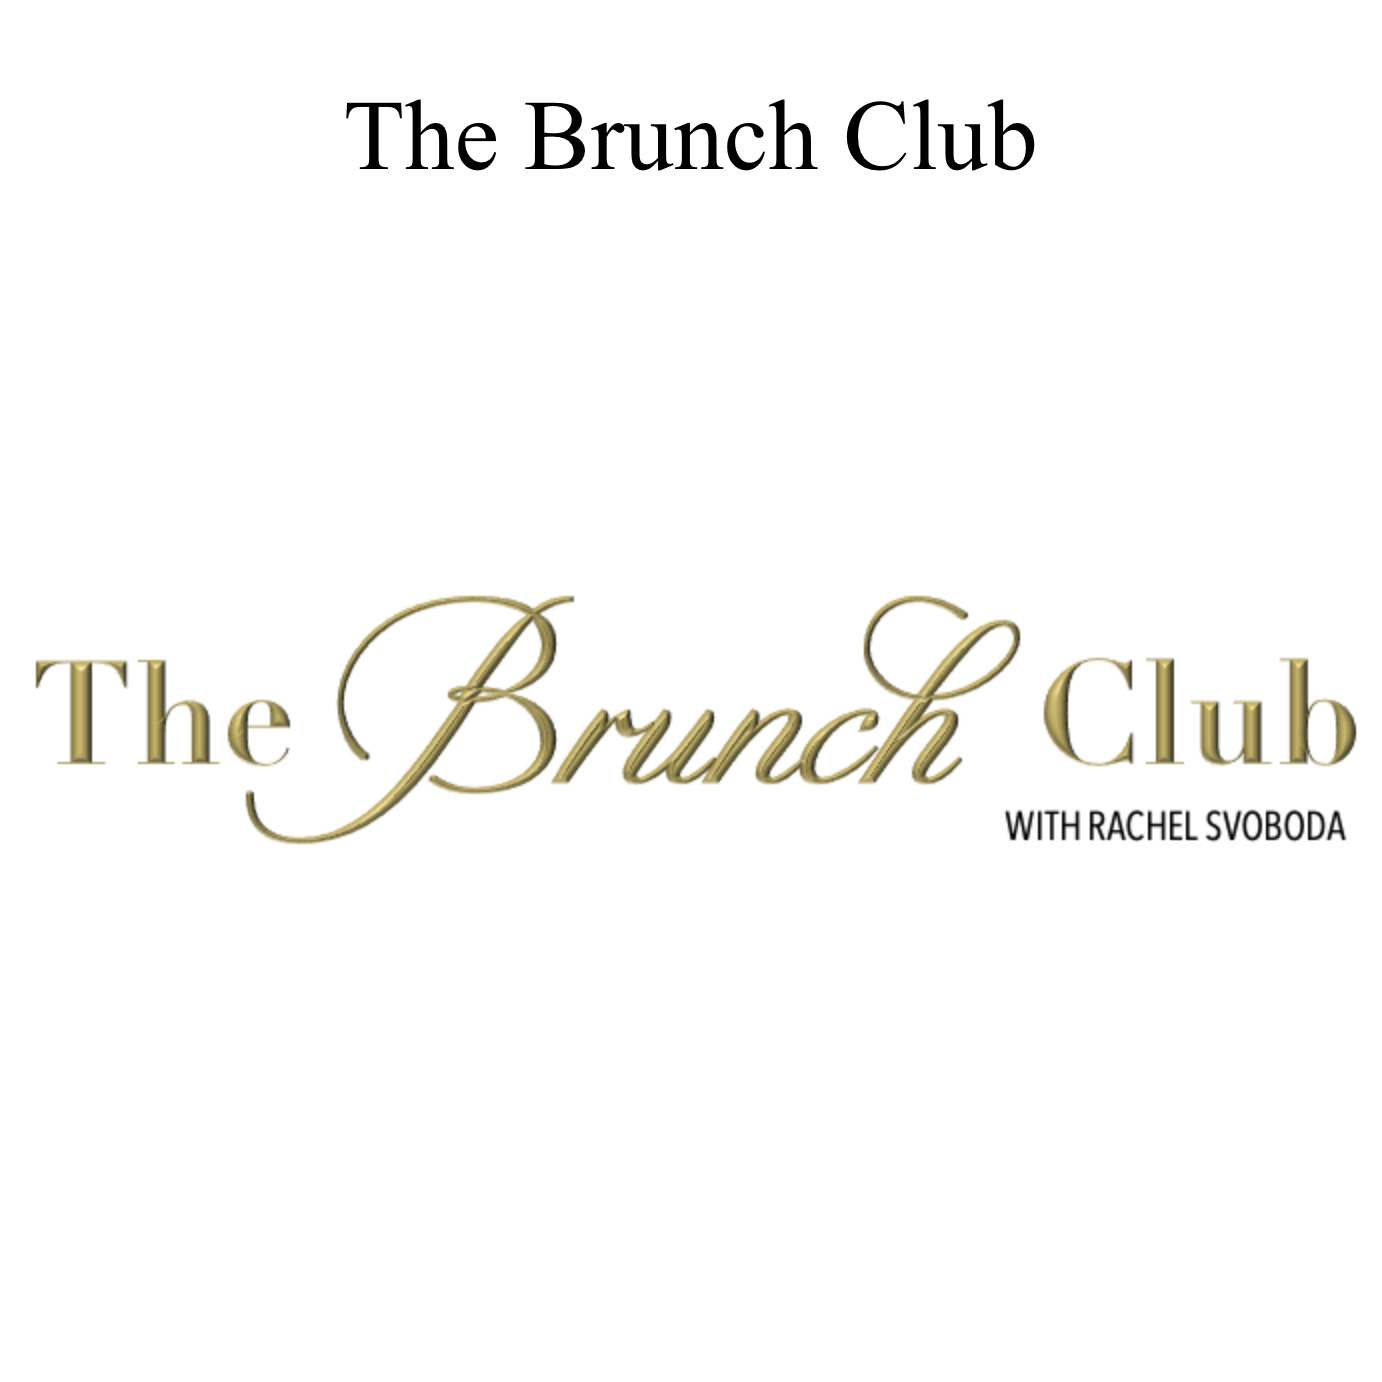 The Brunch Club